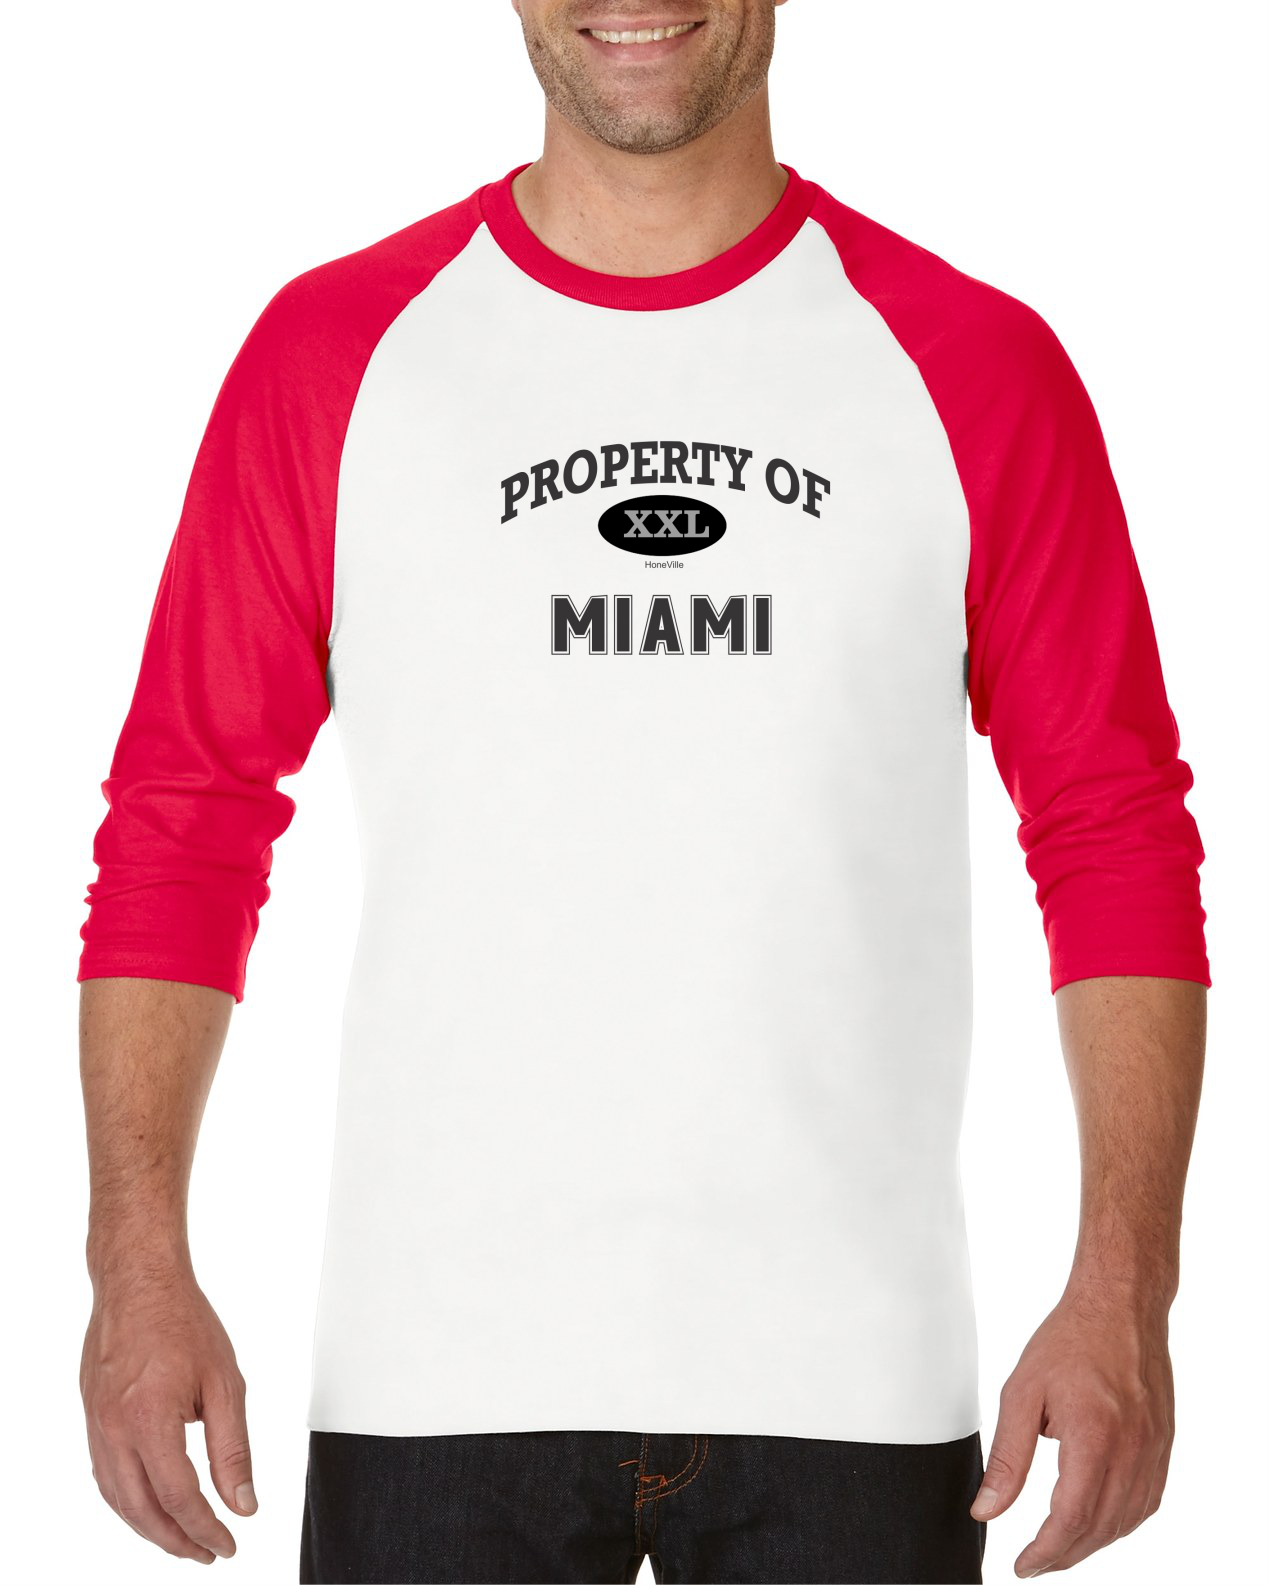 Gildan Long Sleeve T-shirt USA City Property Of Memphis